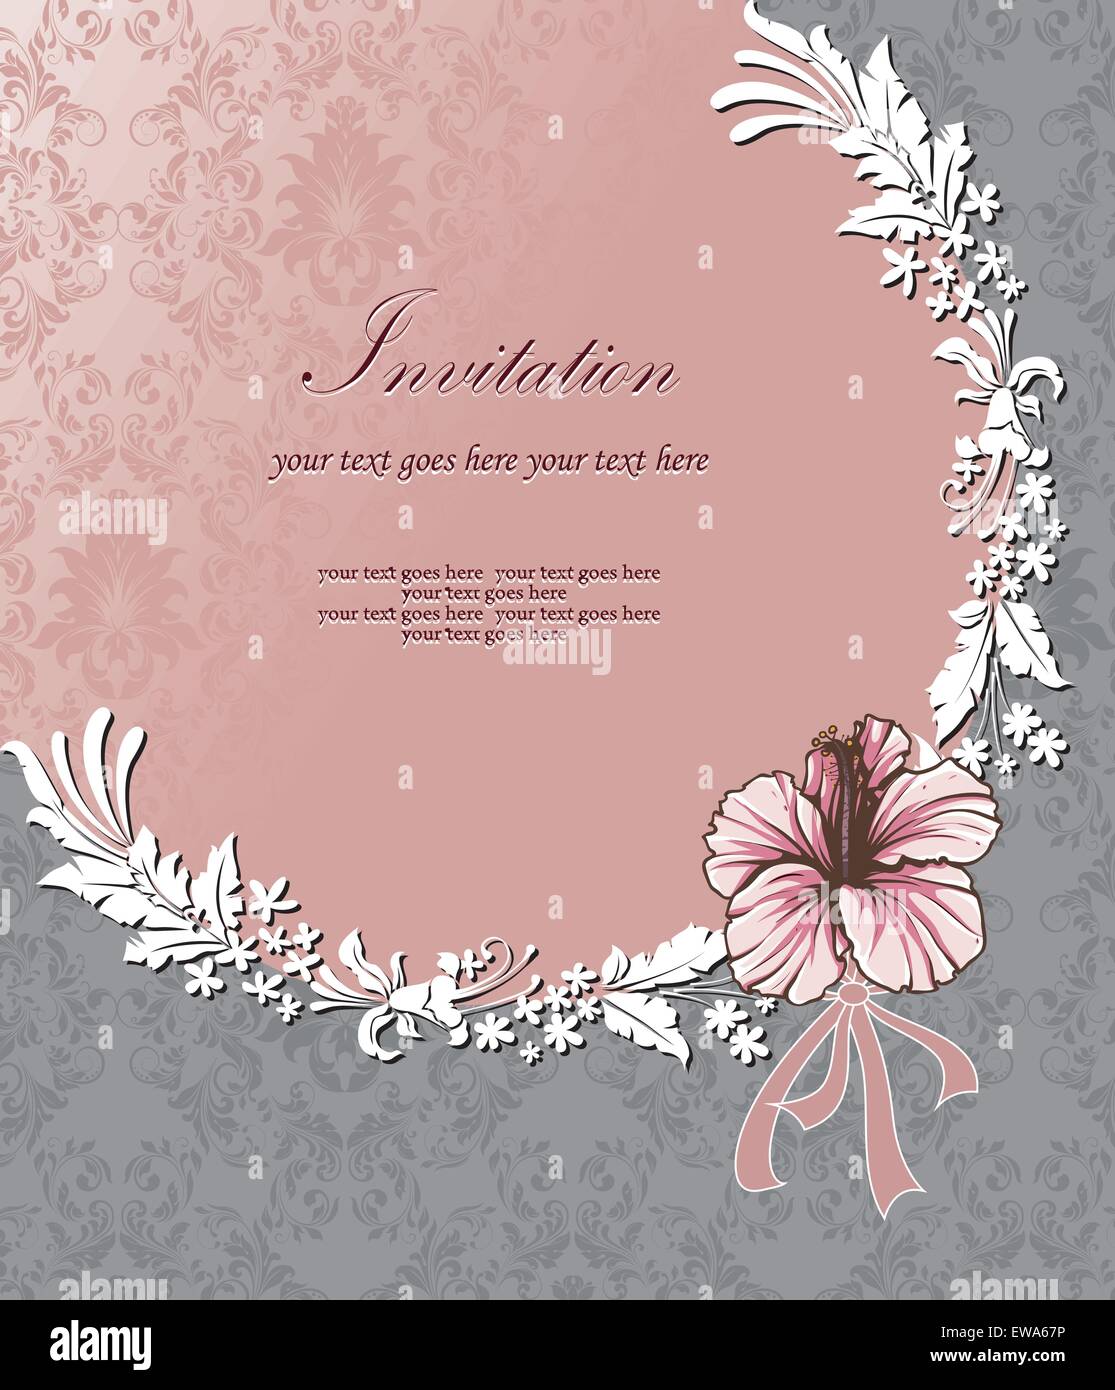 vintage debut invitation designs